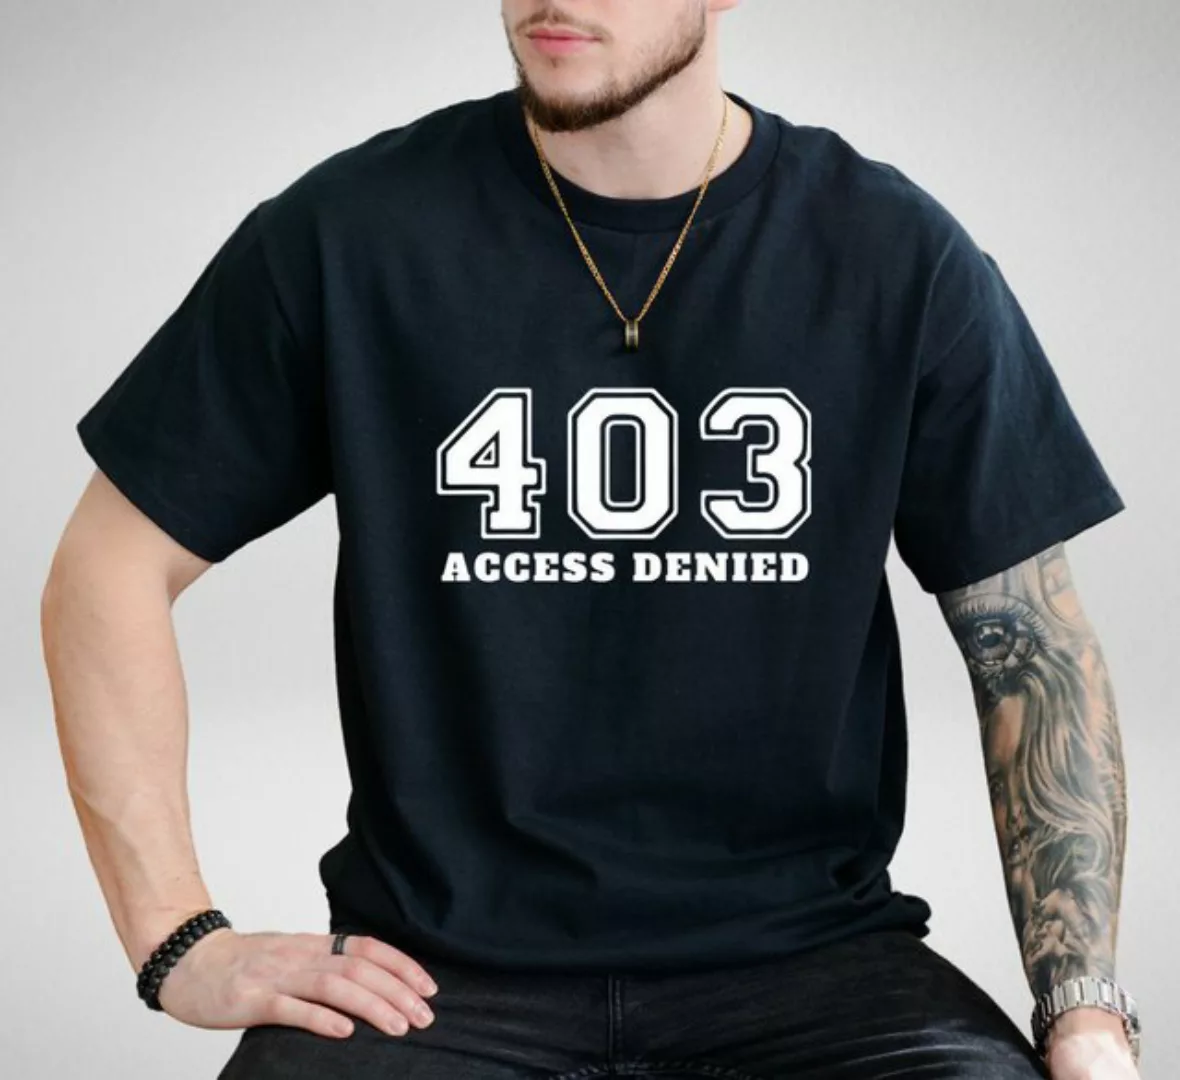 Quality Elegance T-Shirt 403 Access Denied Basic Cotton Tshirt günstig online kaufen